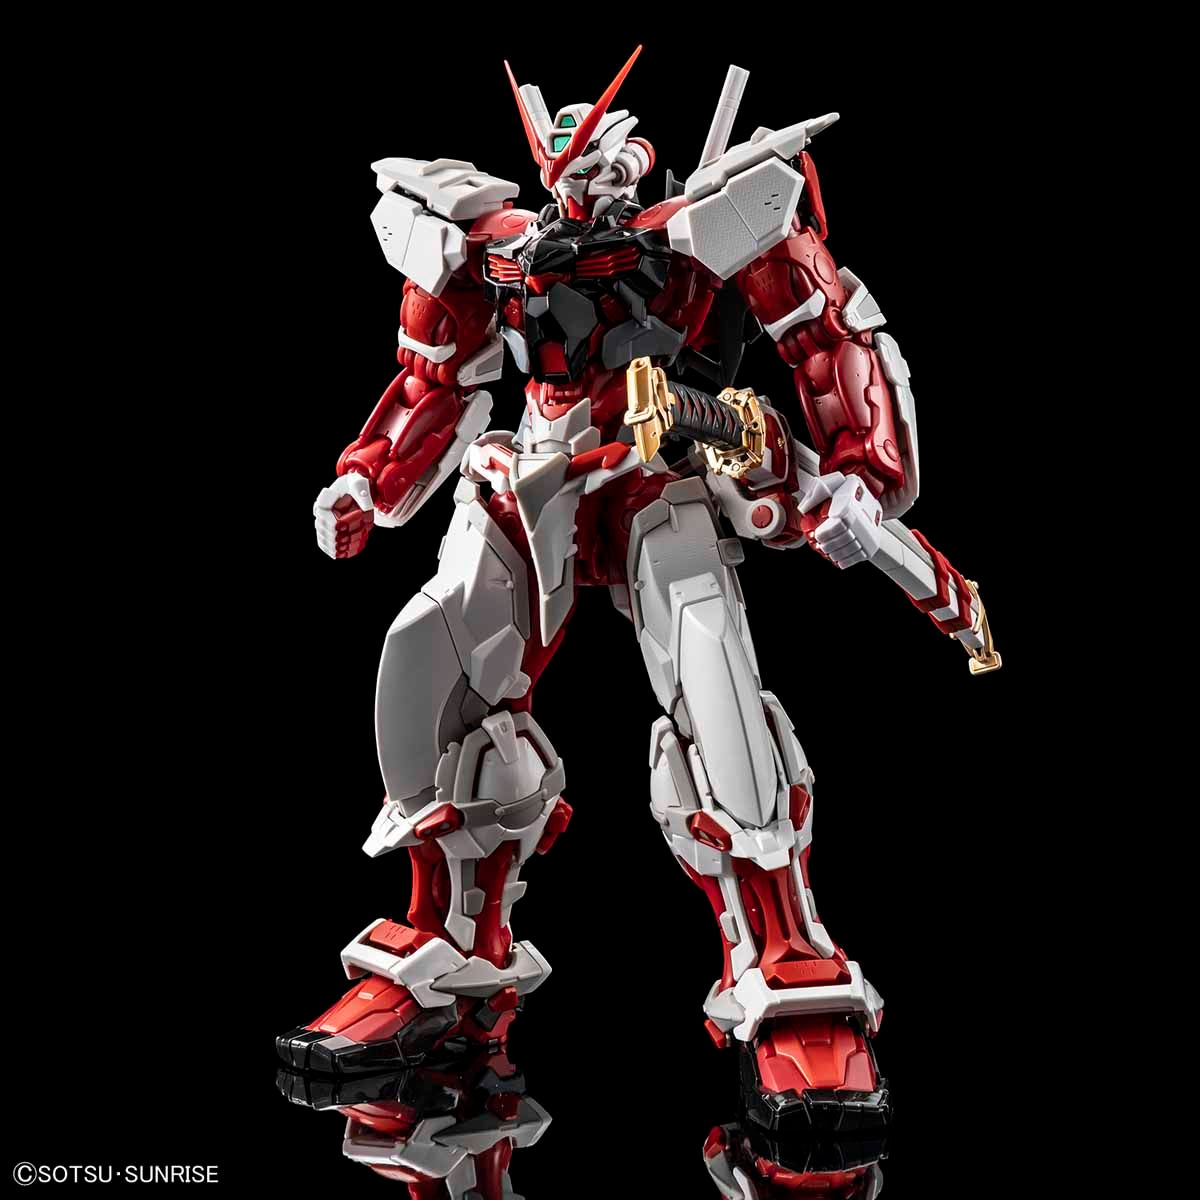 High-Resolution Model 1/100 Gundam Astray Red Frame